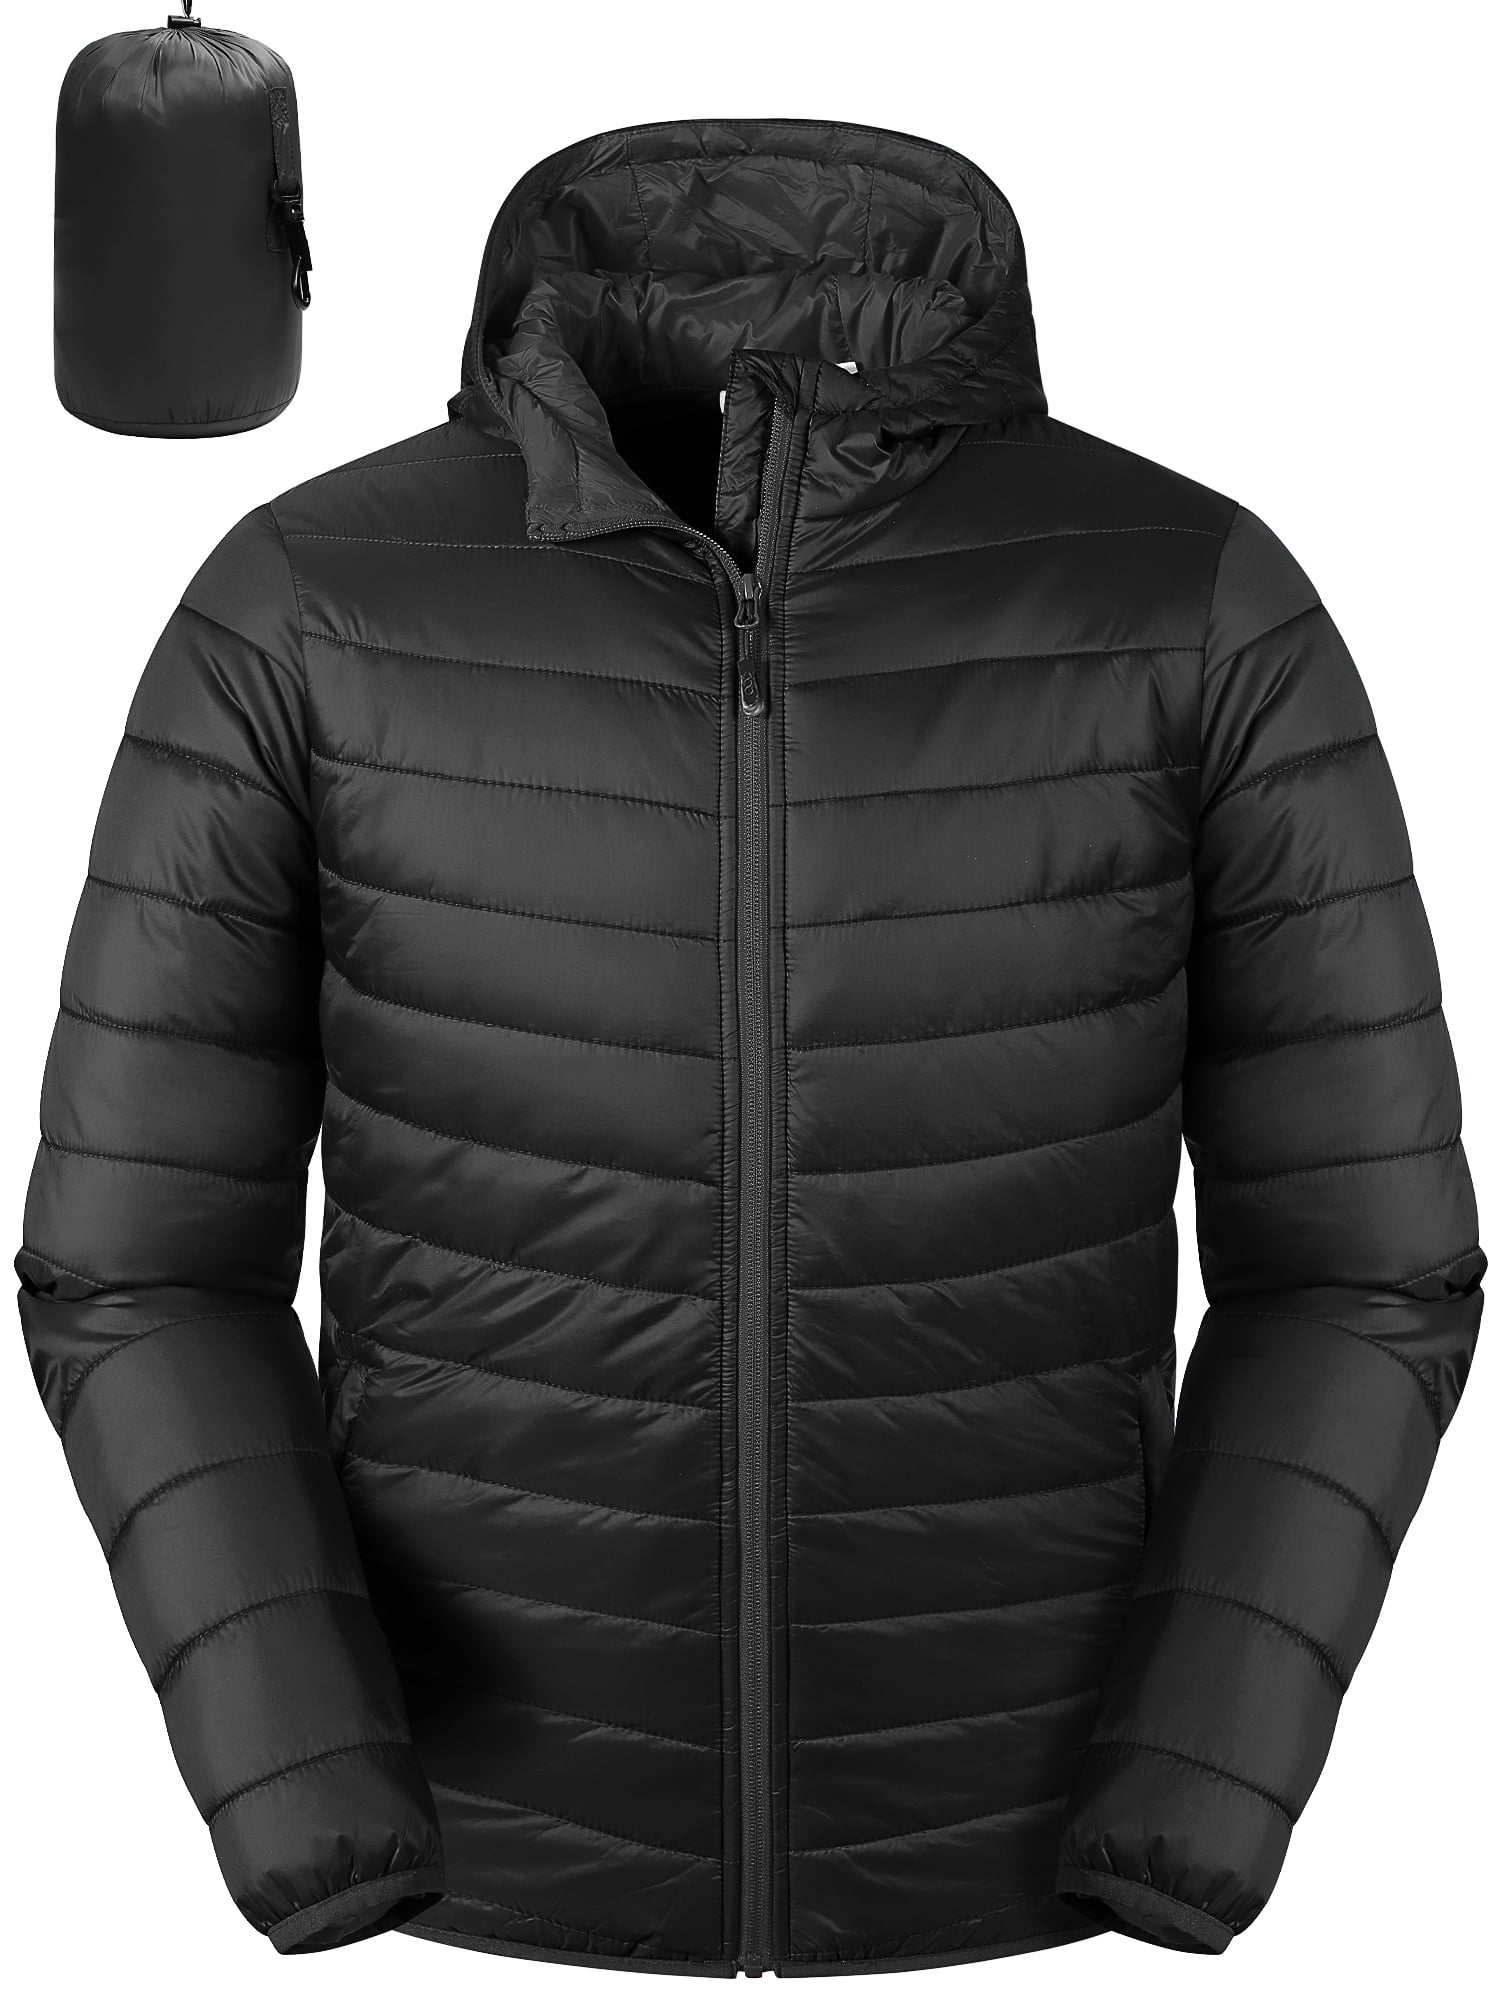 33,000ft Men's Lightweight Packable Insulated Puffer Winter Jacket with ...